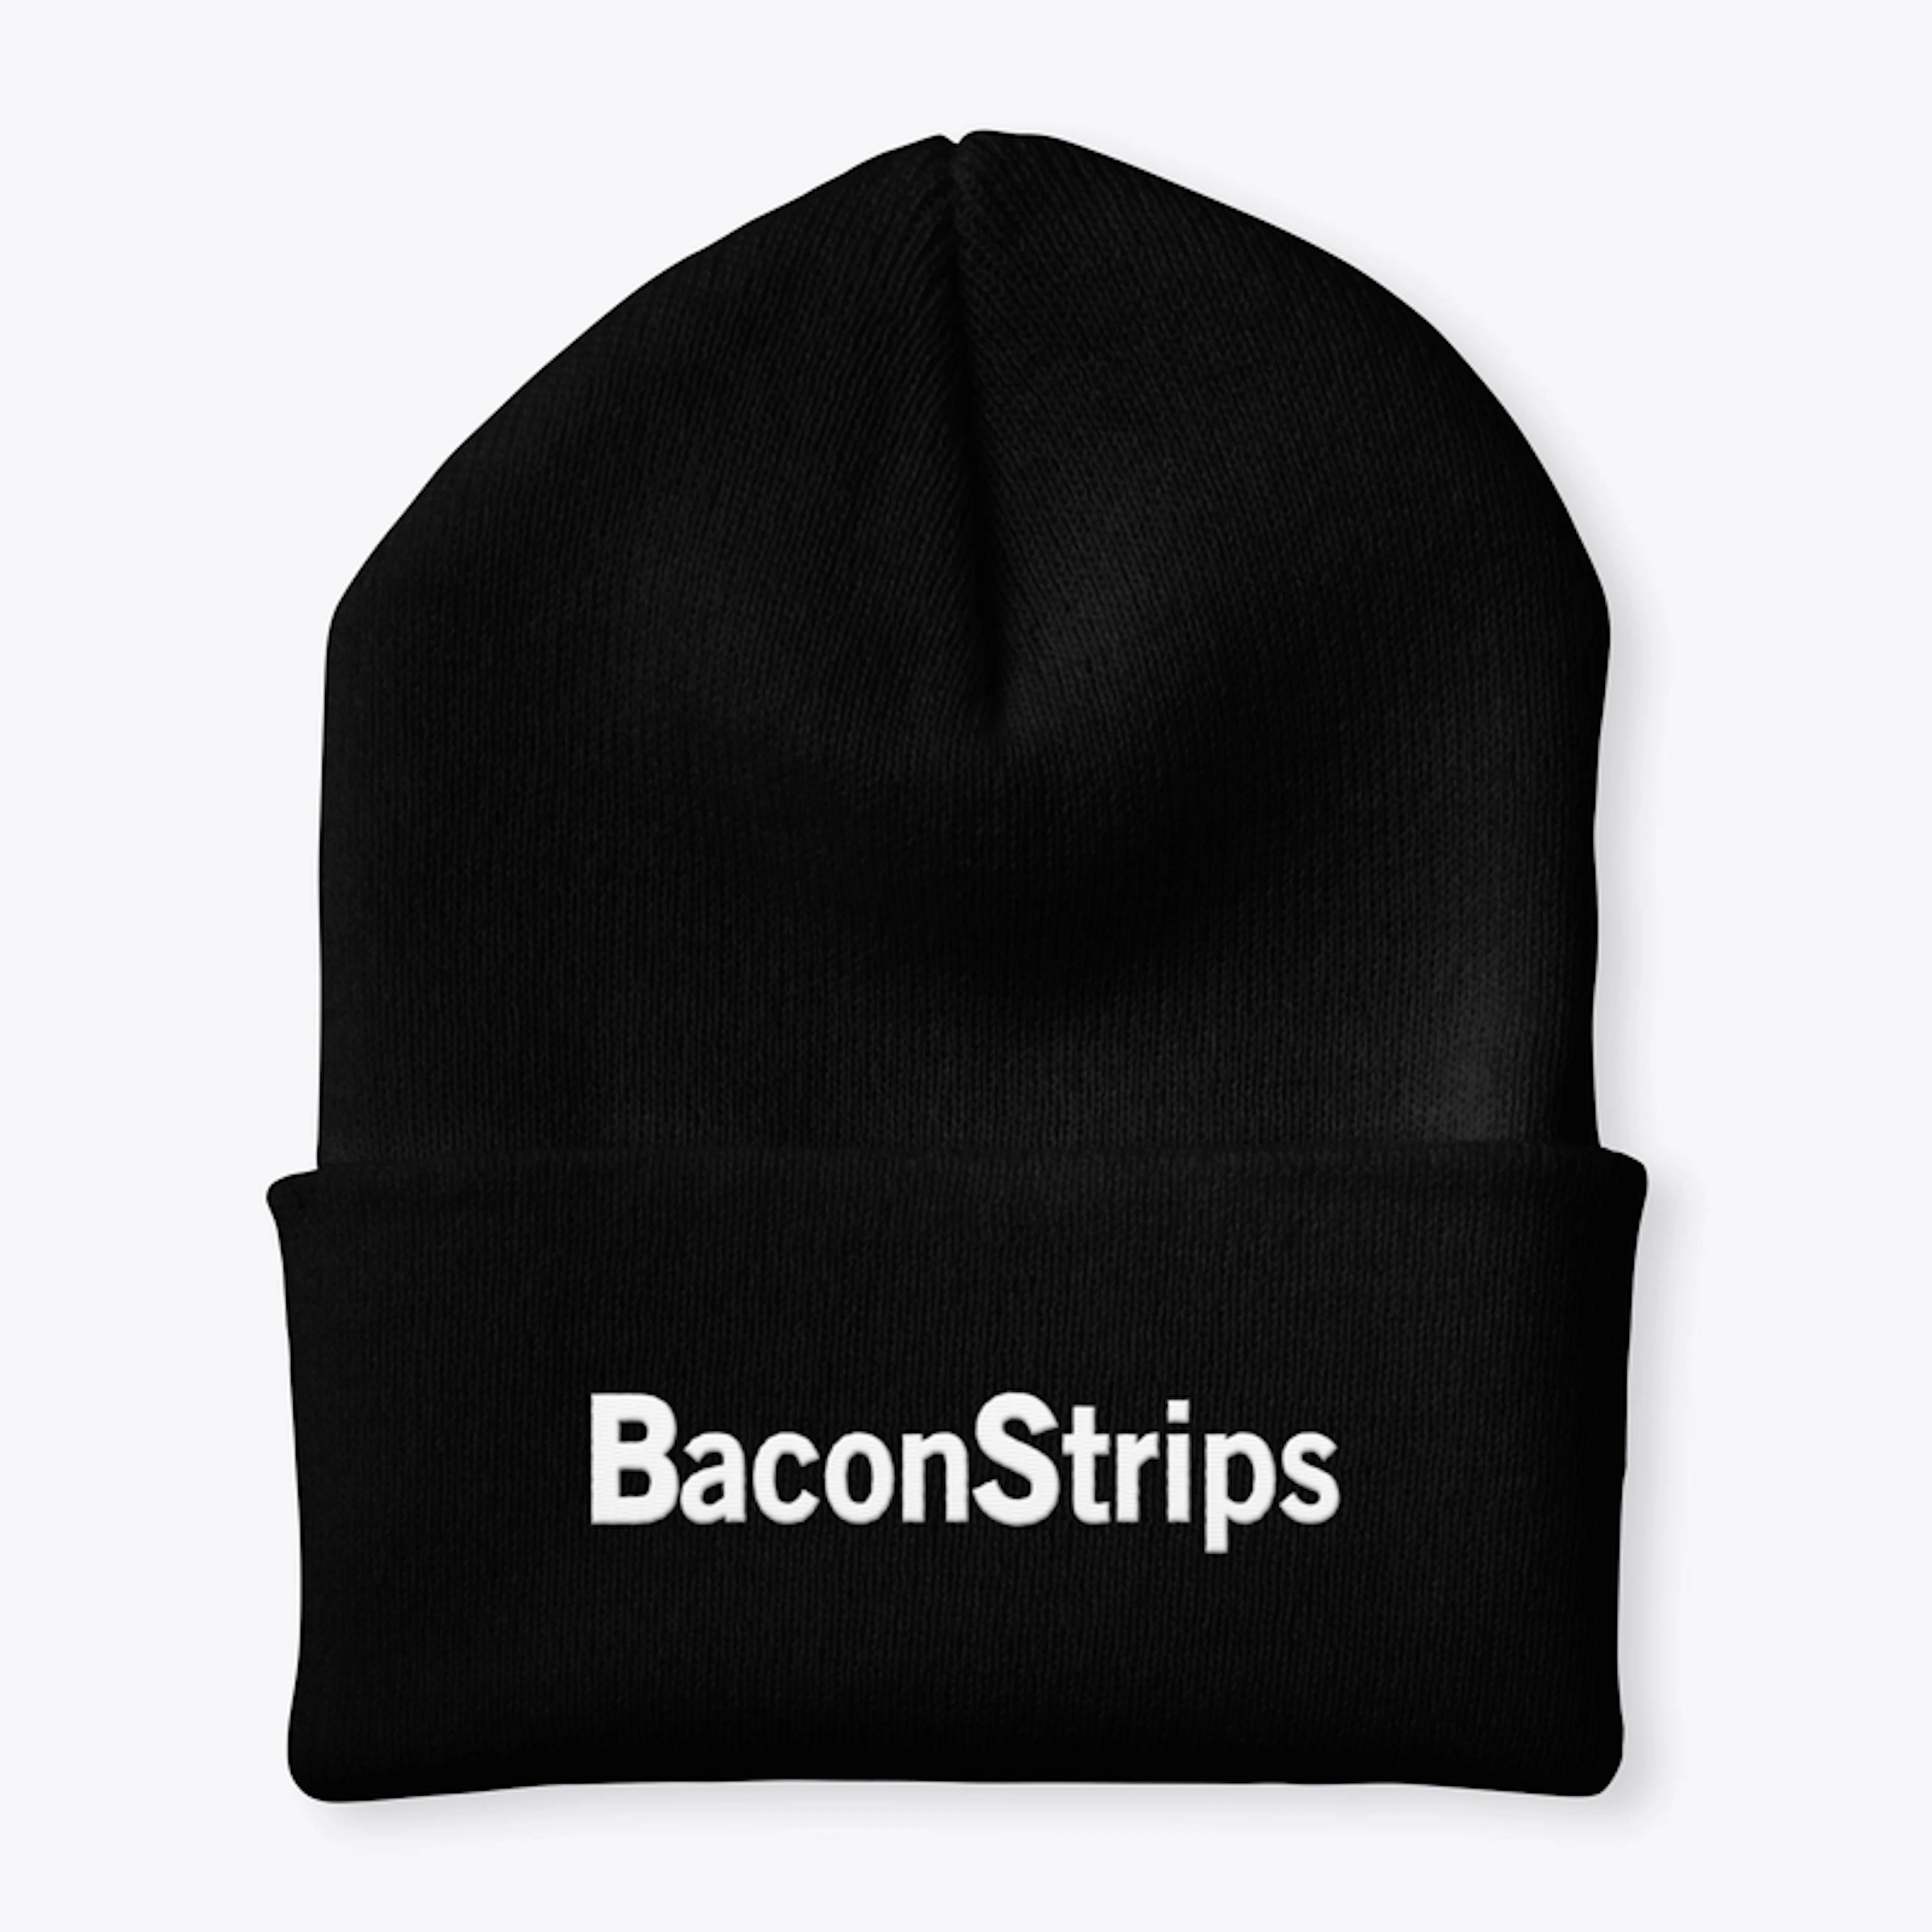 Bacon Strips - Black Beanie 